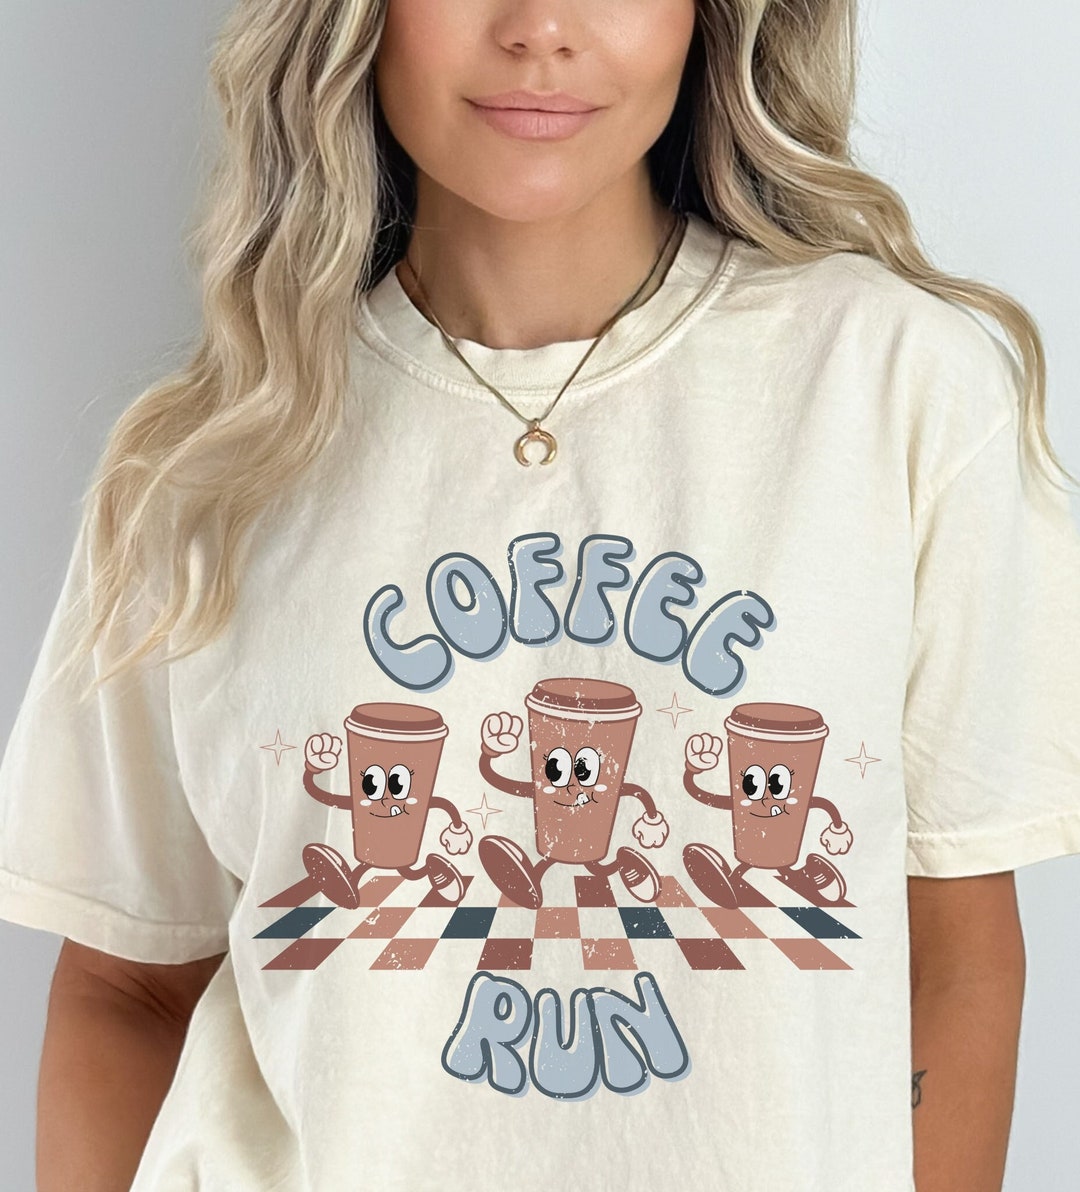 Retro Coffee Run Shirt, Retro Graphic Tee, Comfort Colors Shirt, Funny ...